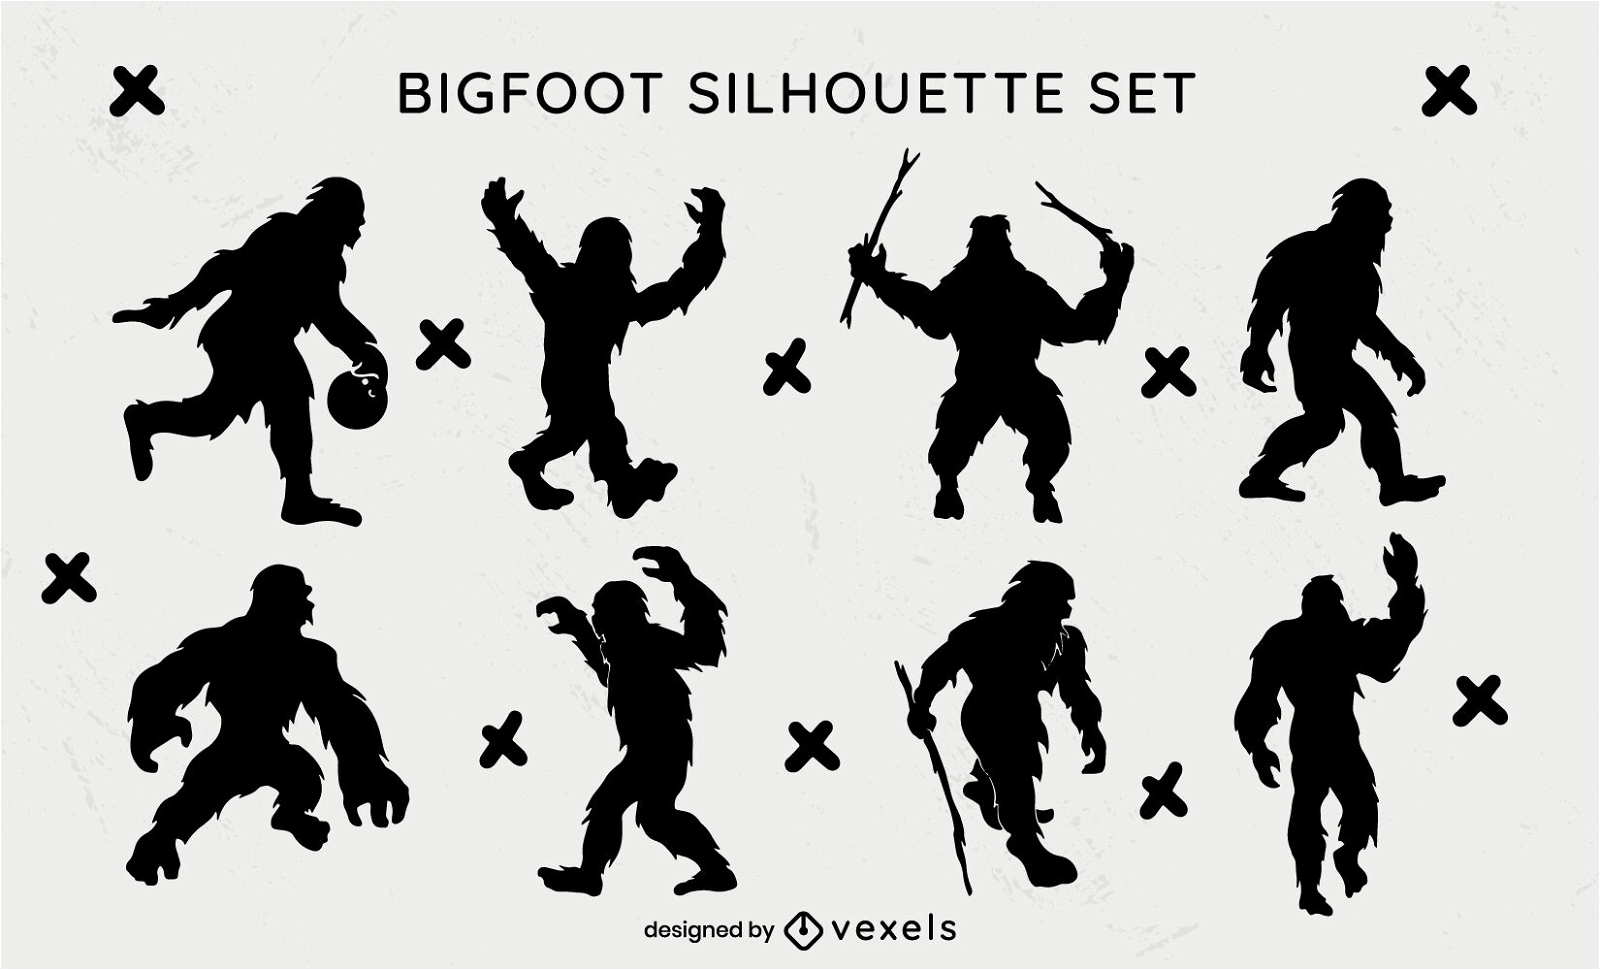 Big foot monster poses silhouette set